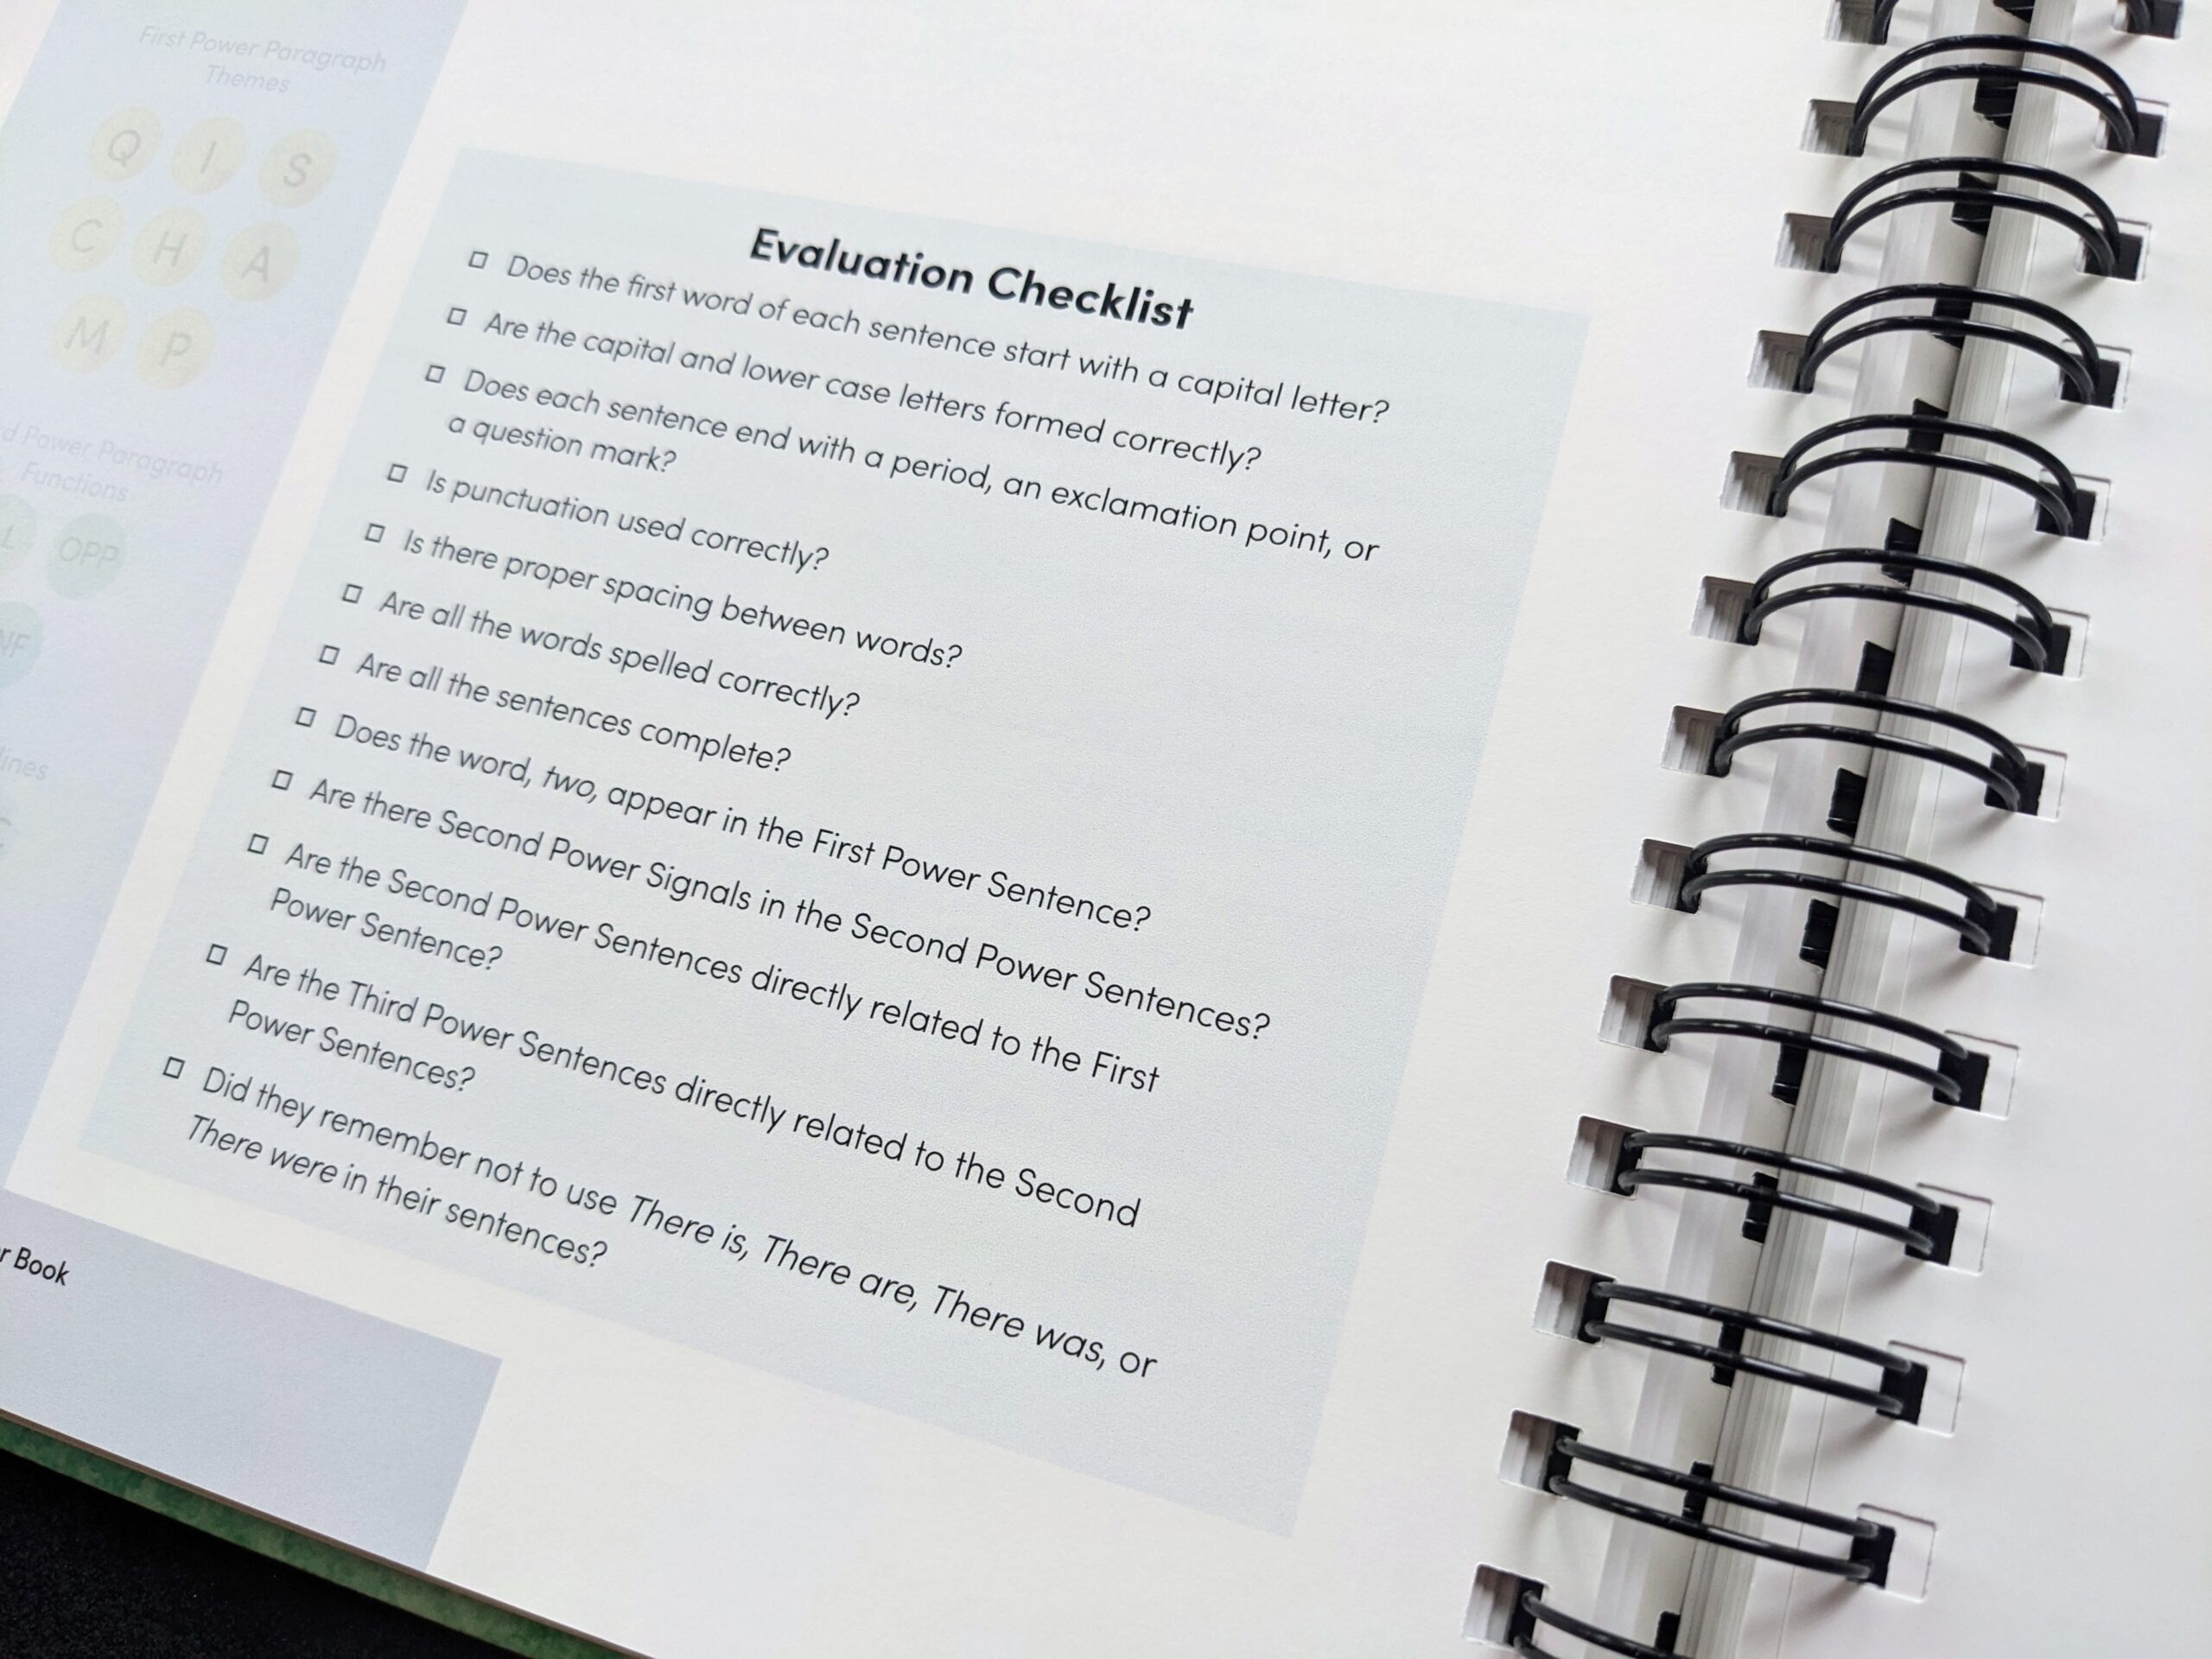 Sample evaluation checklist